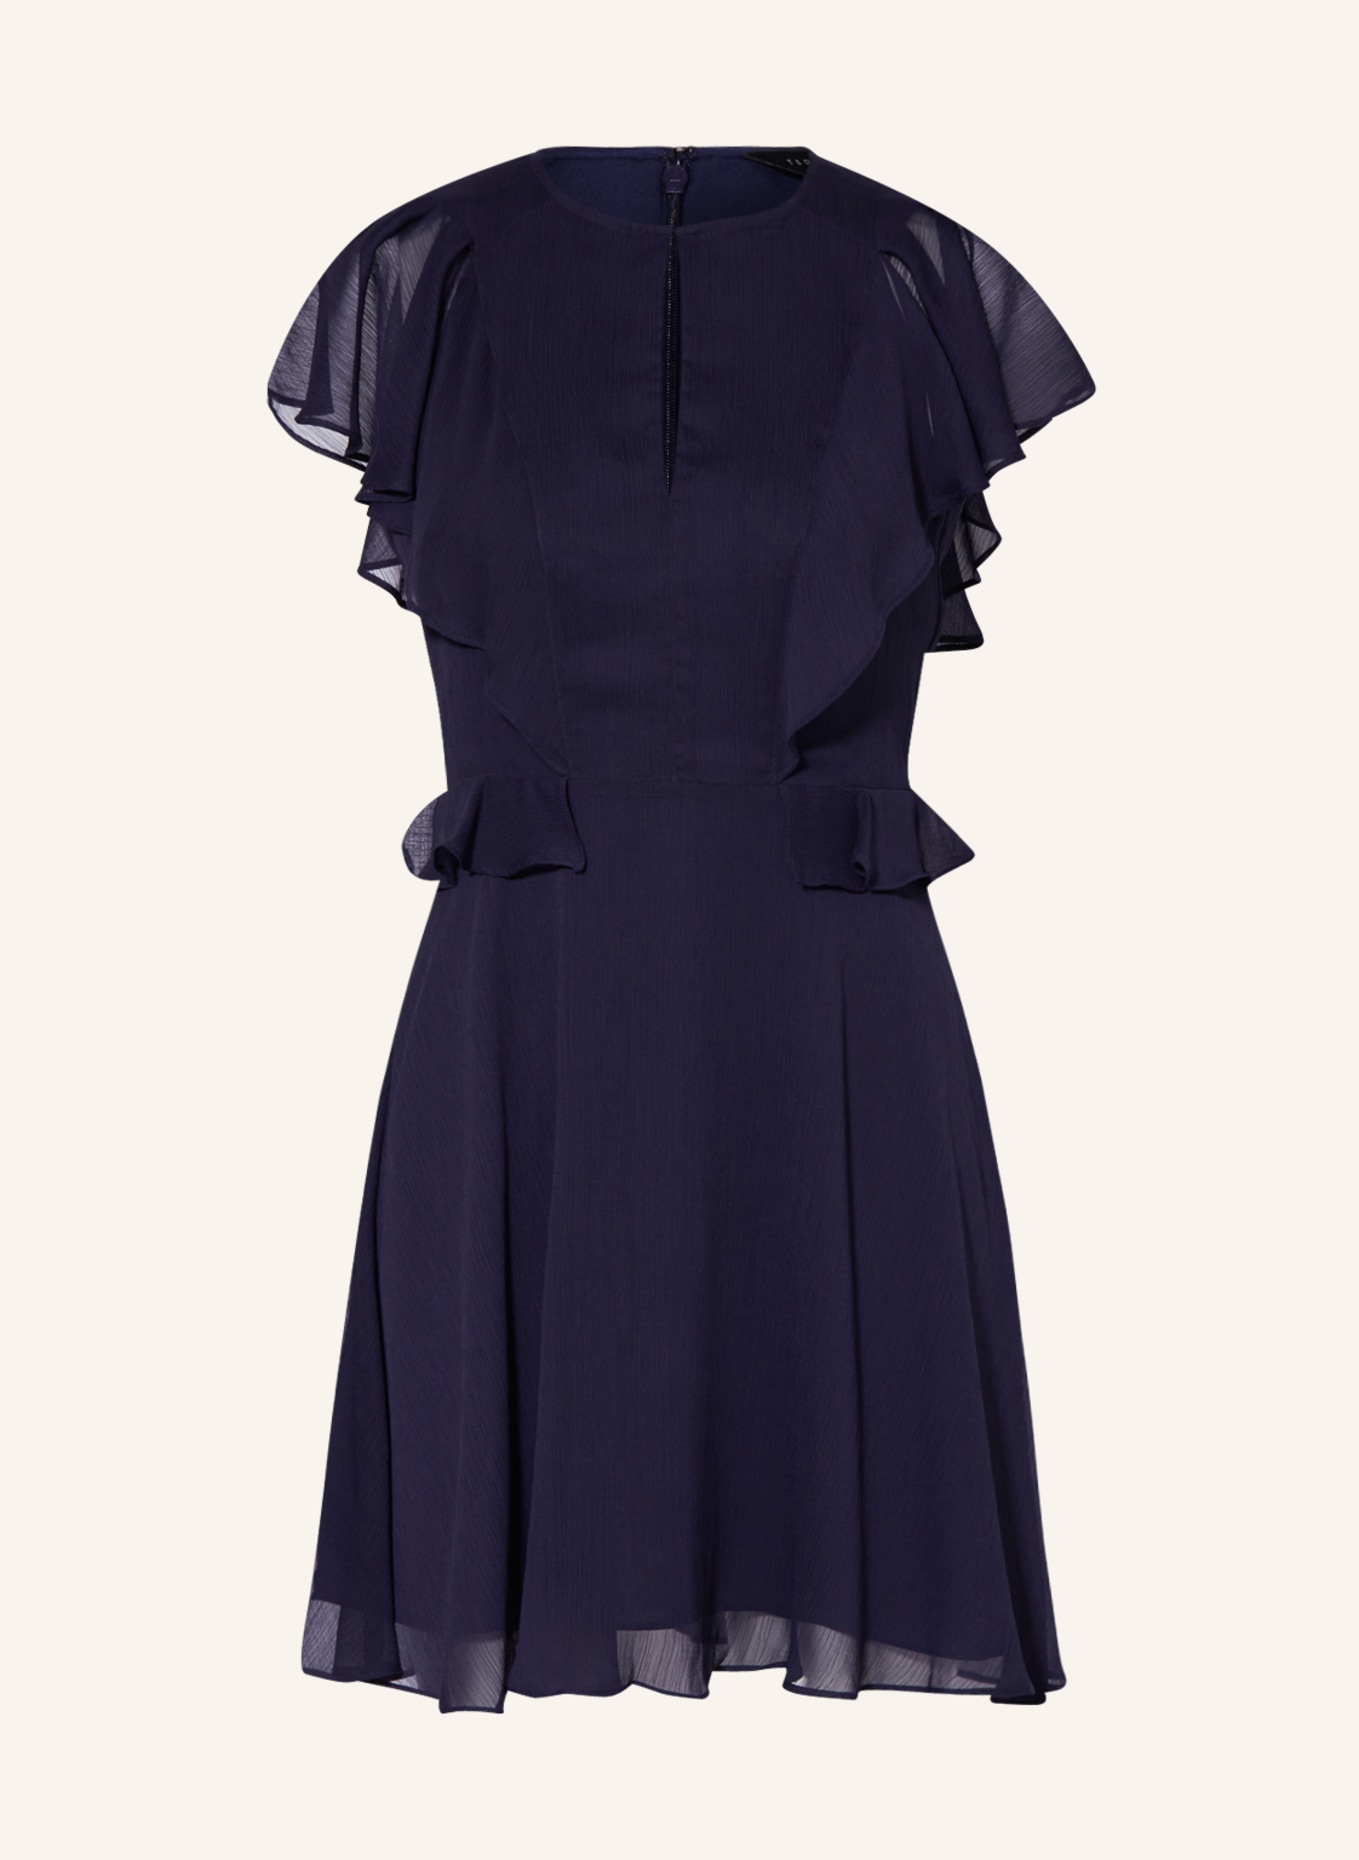 TED BAKER Kleid KIARAN mit Volants, Farbe: DUNKELBLAU (Bild 1)